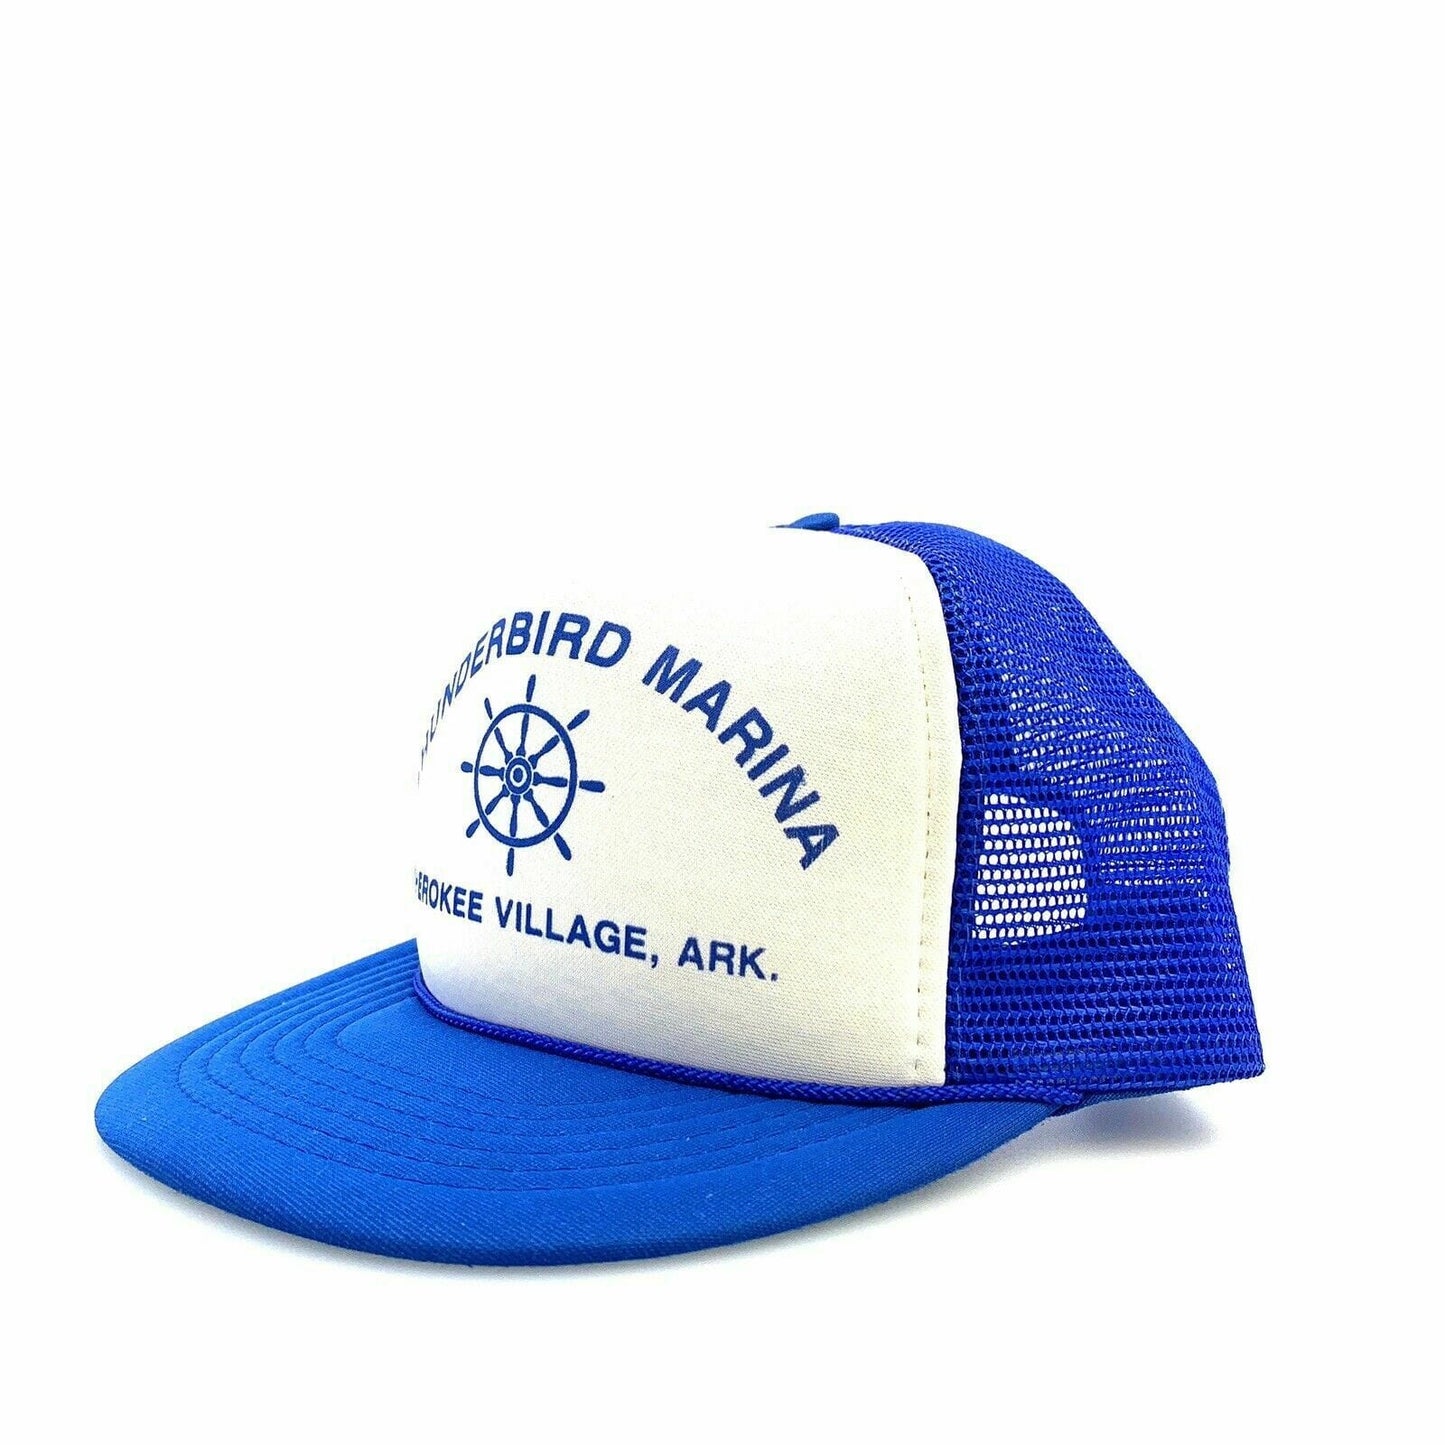 Vintage Headmost THUNDERBIRD MARINA Mesh SnapBack Trucker Hat, White / Blue - OSFA